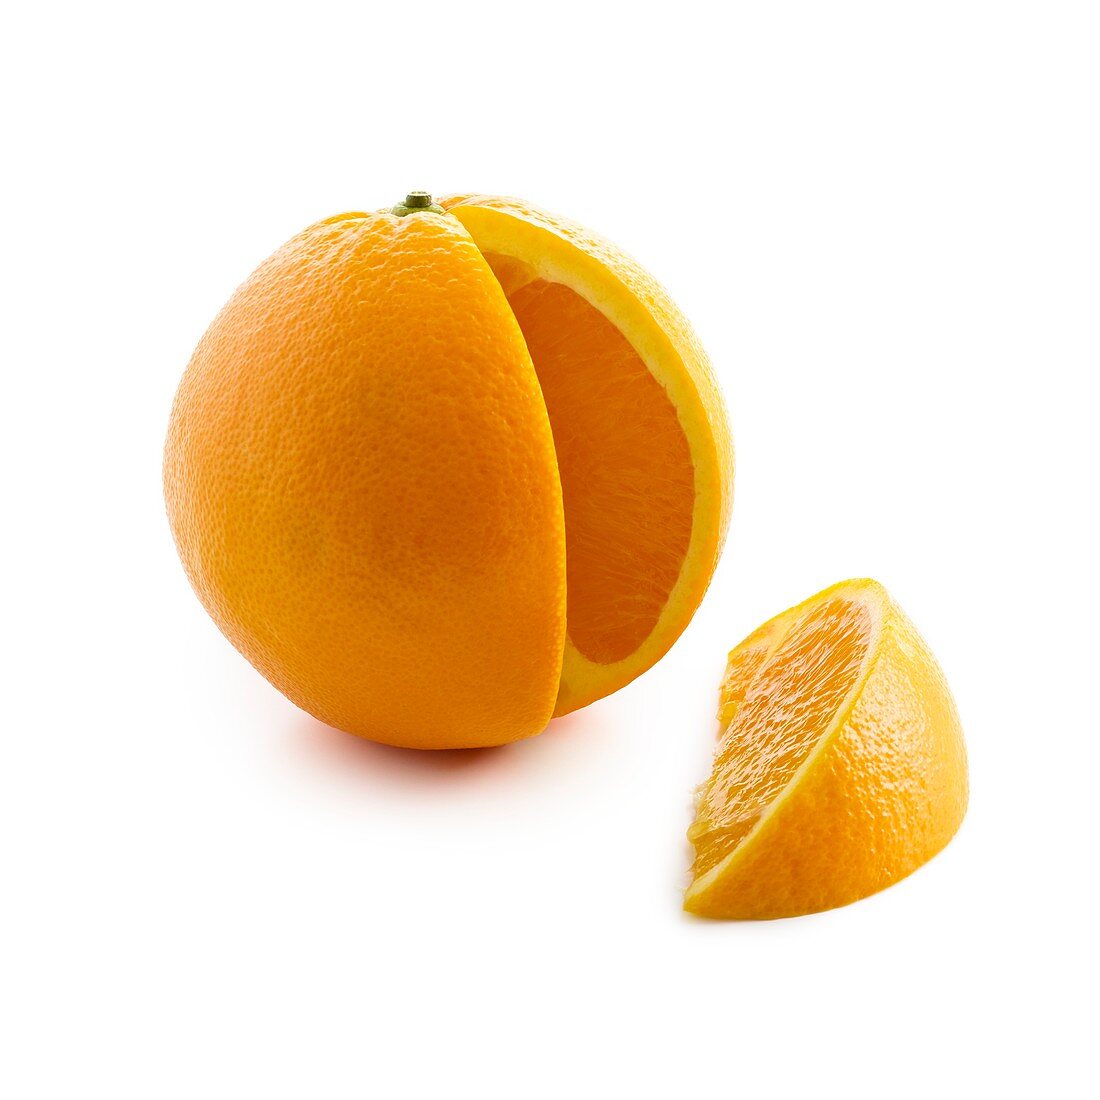 Orange segment cut from orange